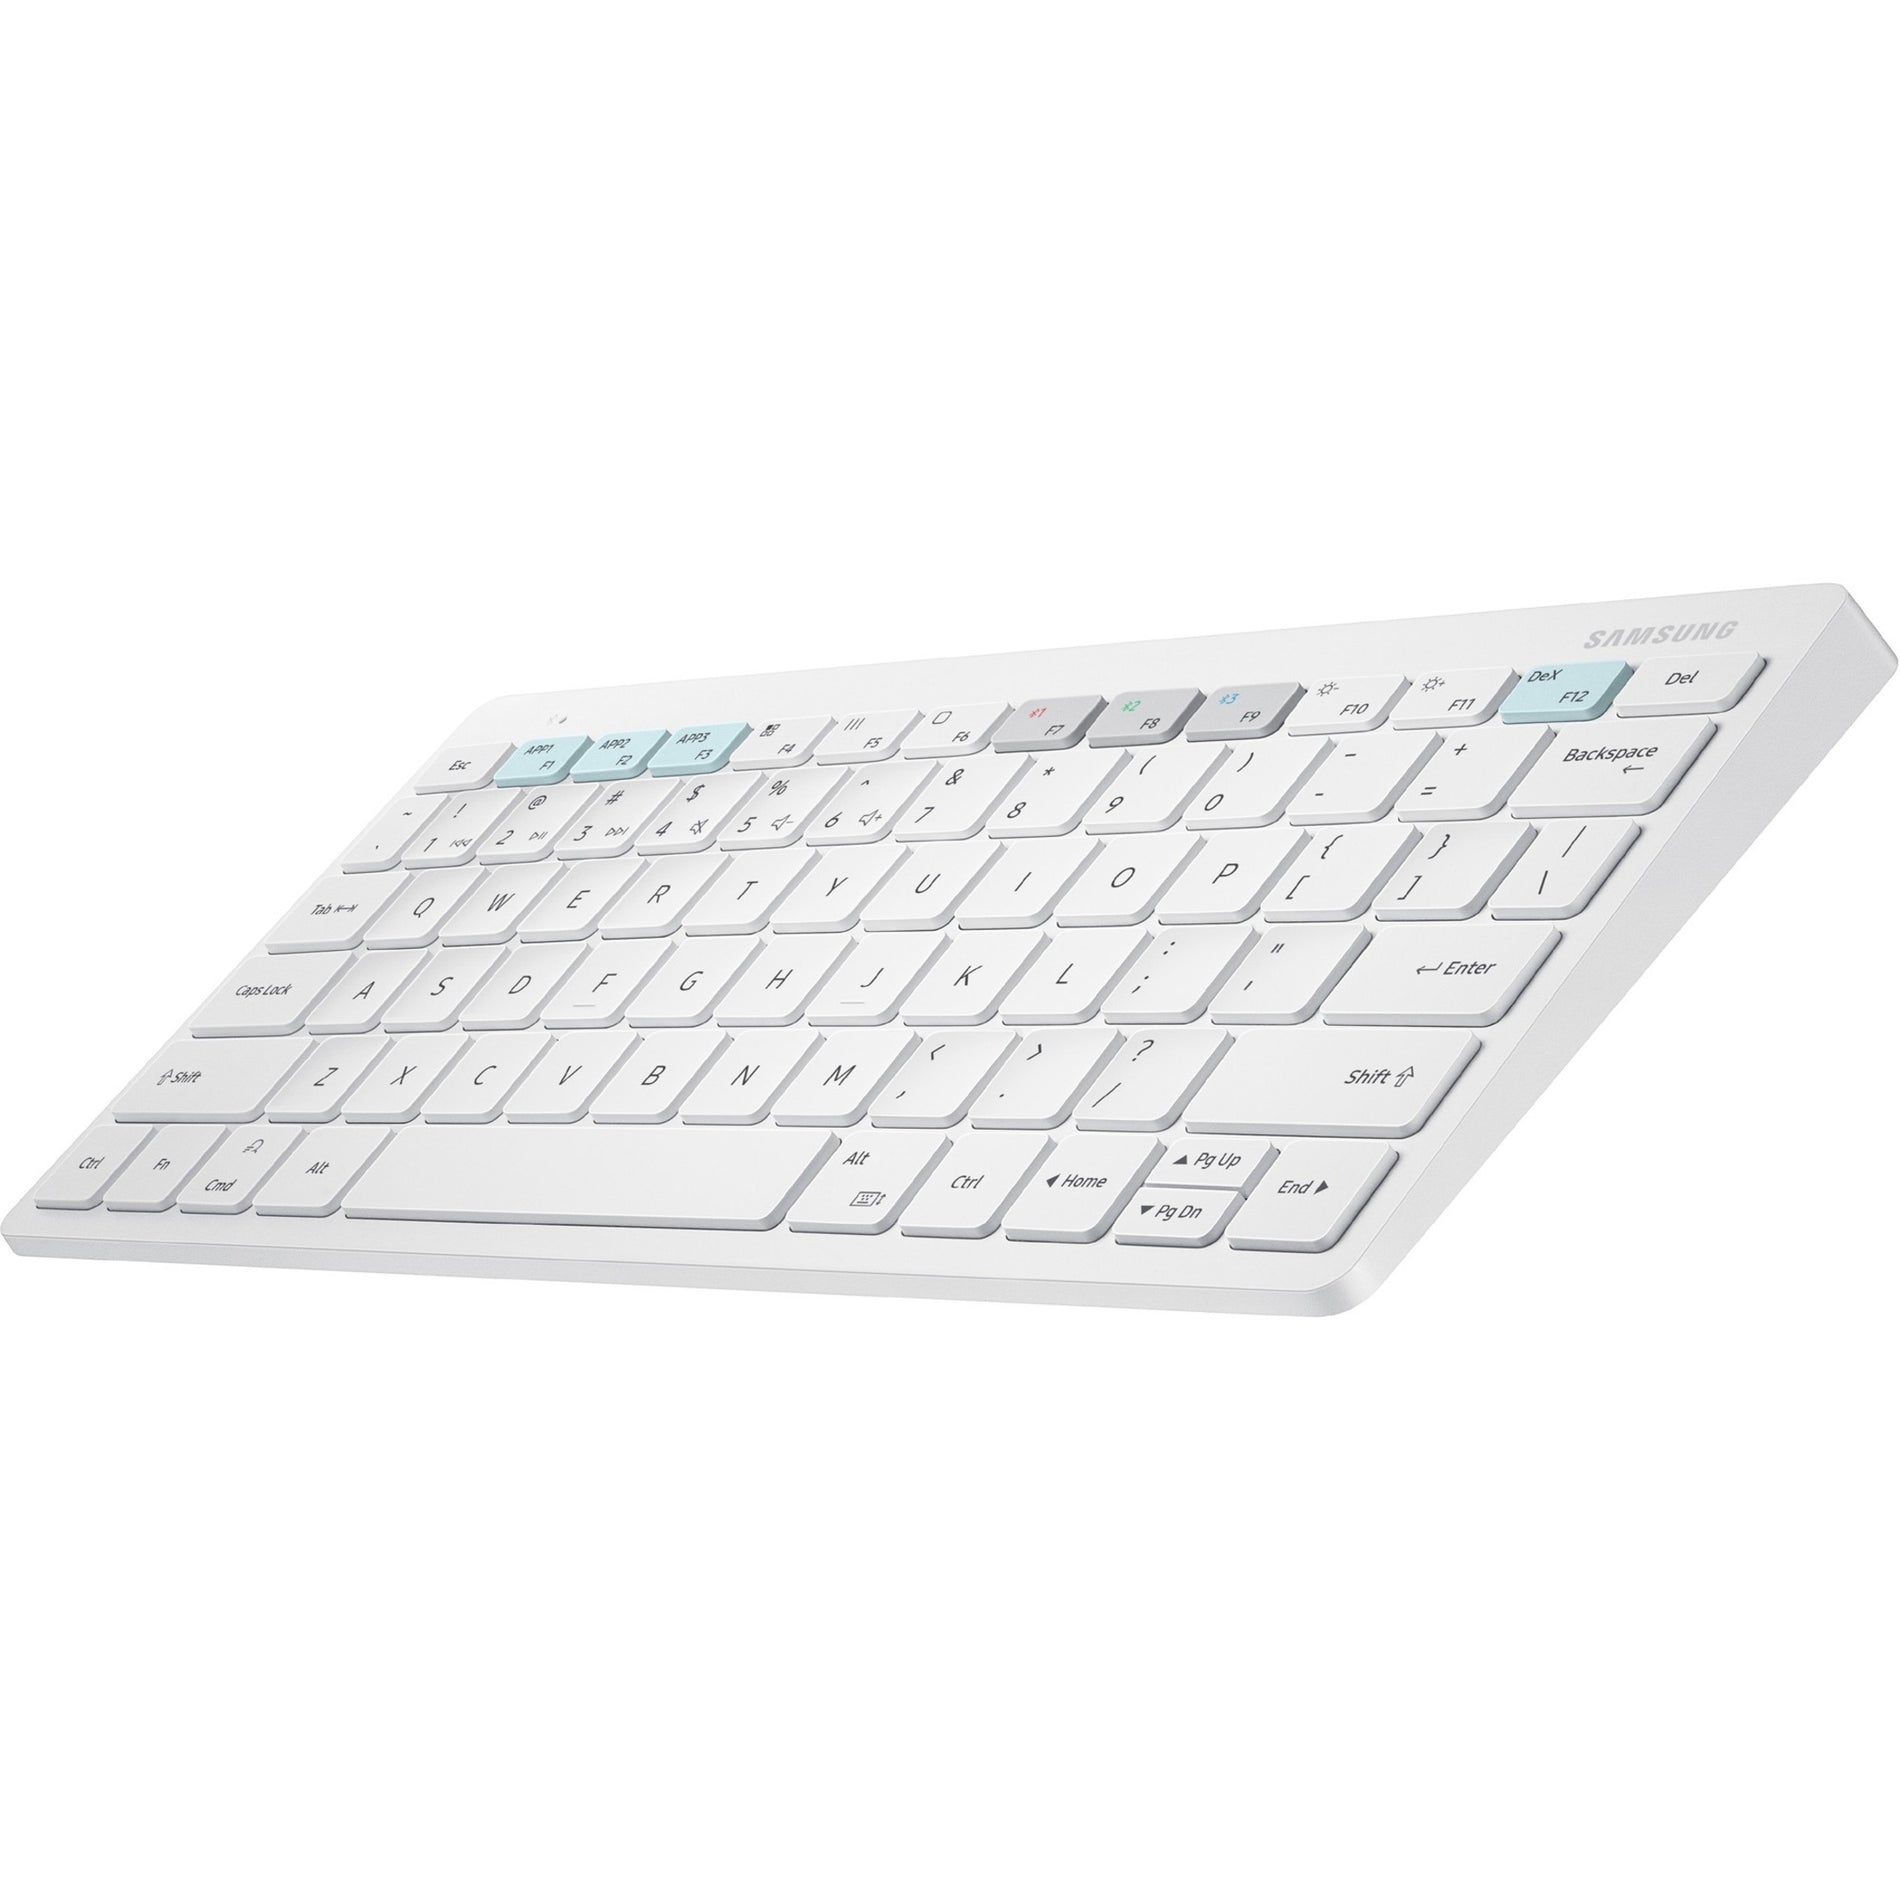 Samsung EJ-B3400UWEGUS Smart Keyboard Trio 500, White - Slim Bluetooth Wireless Keyboard